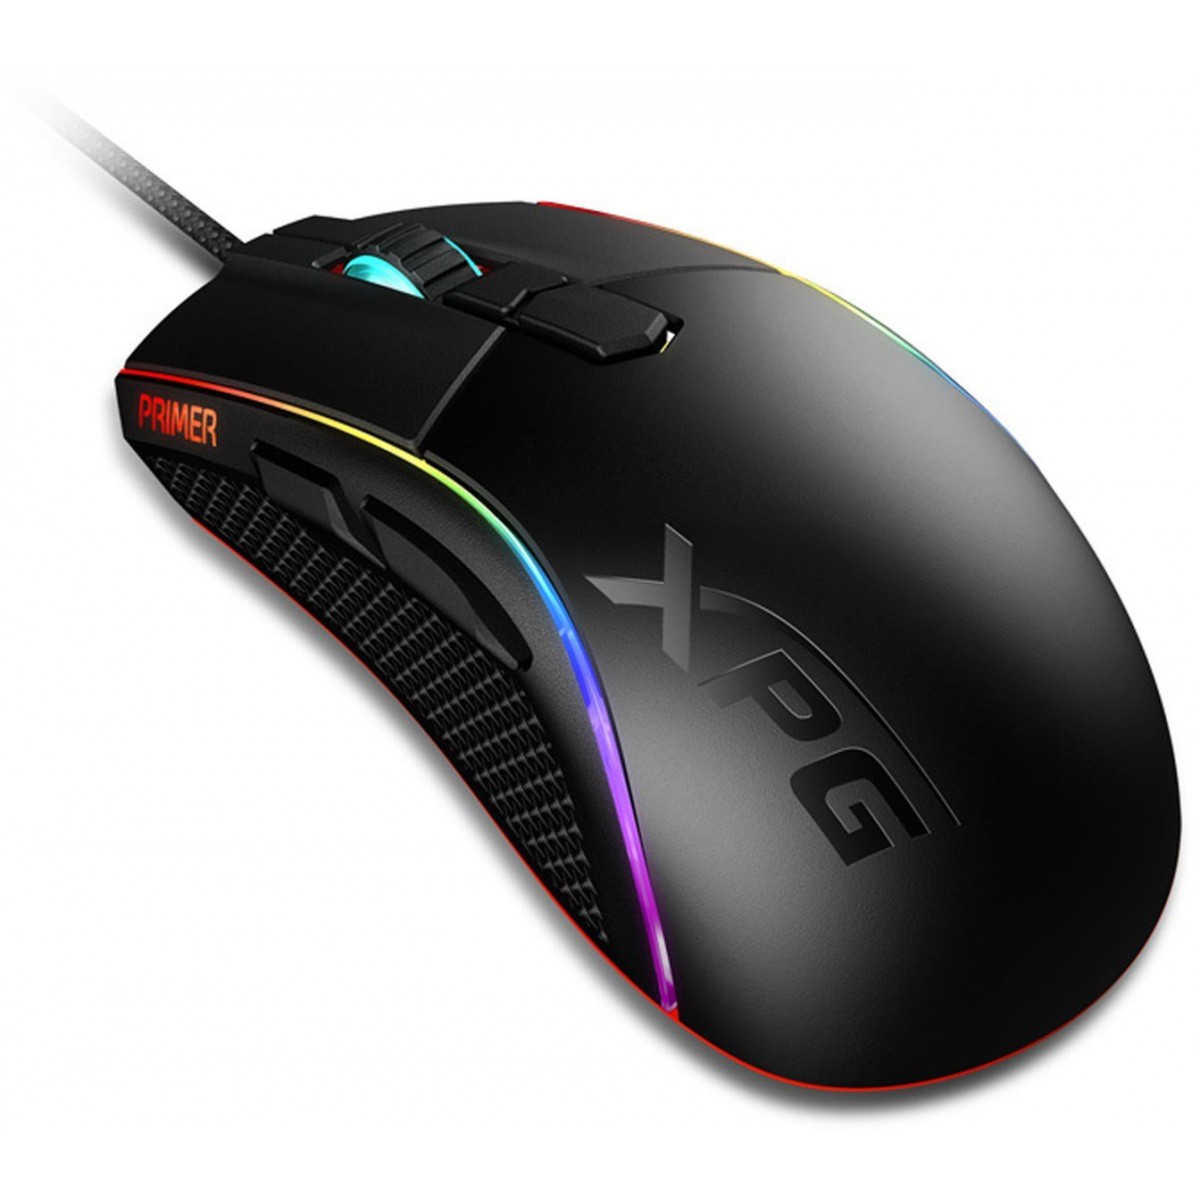 Mouse Gamer XPG, Primer, 12000DPI, RGB, 7 Botões, Black, PRIMER-BKCWW